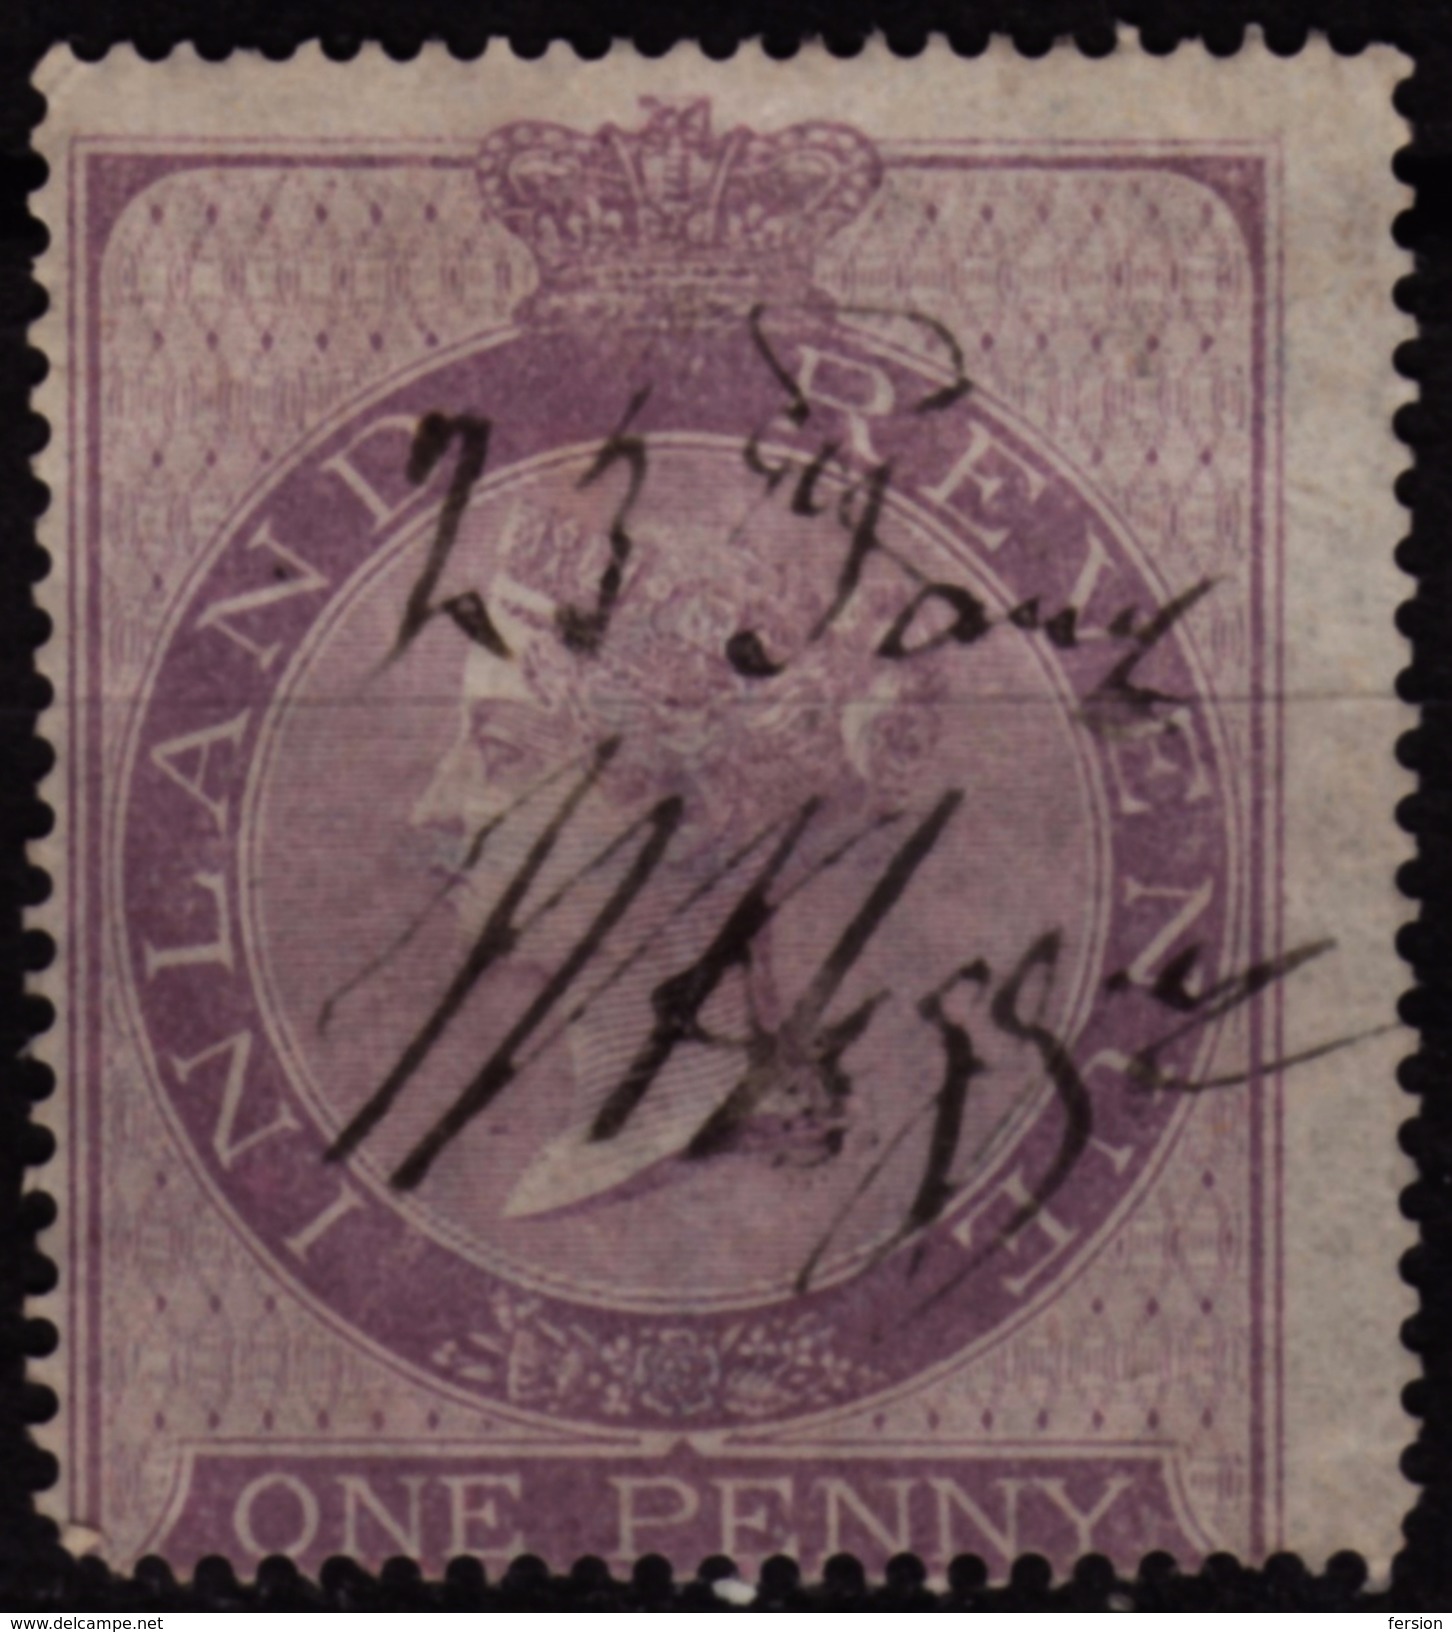 Inland Revenue - P.1 - REVENUE FISCAL DUTY TAX STAMP - Used - 1881 UK Great Britain / Queen Victoria - Fiscaux